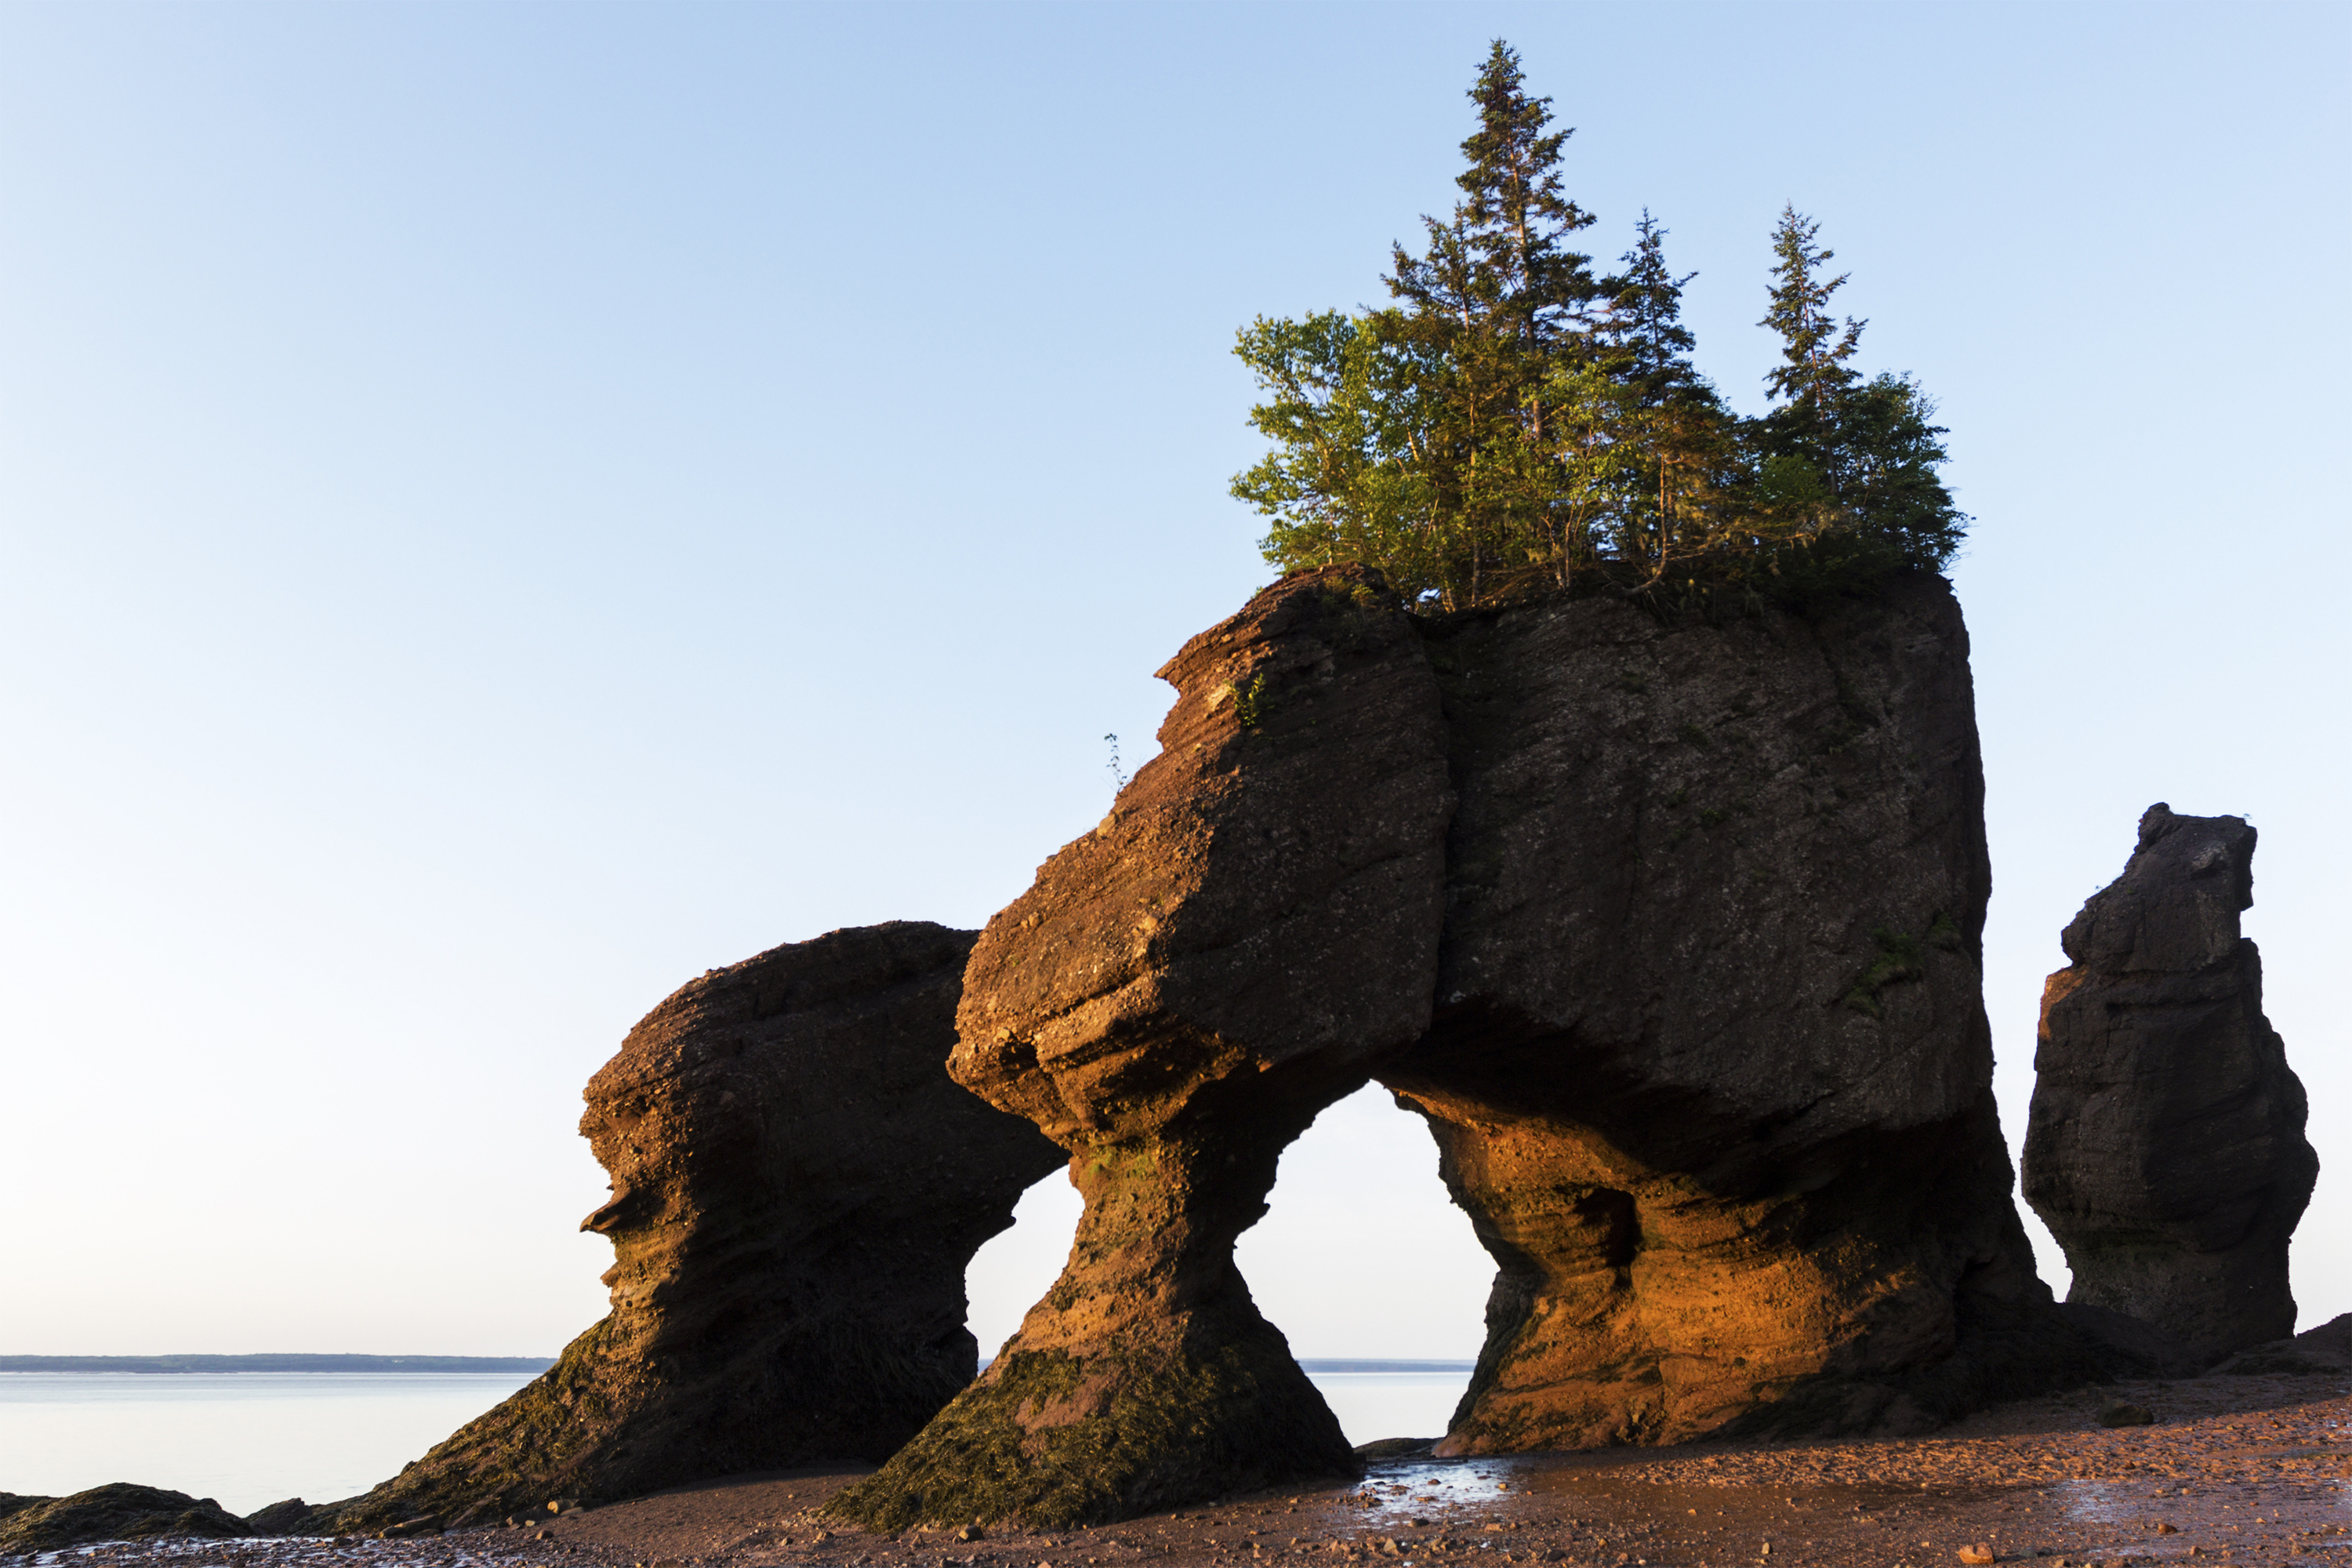 Hopewell Rocks in Canada at sunrise